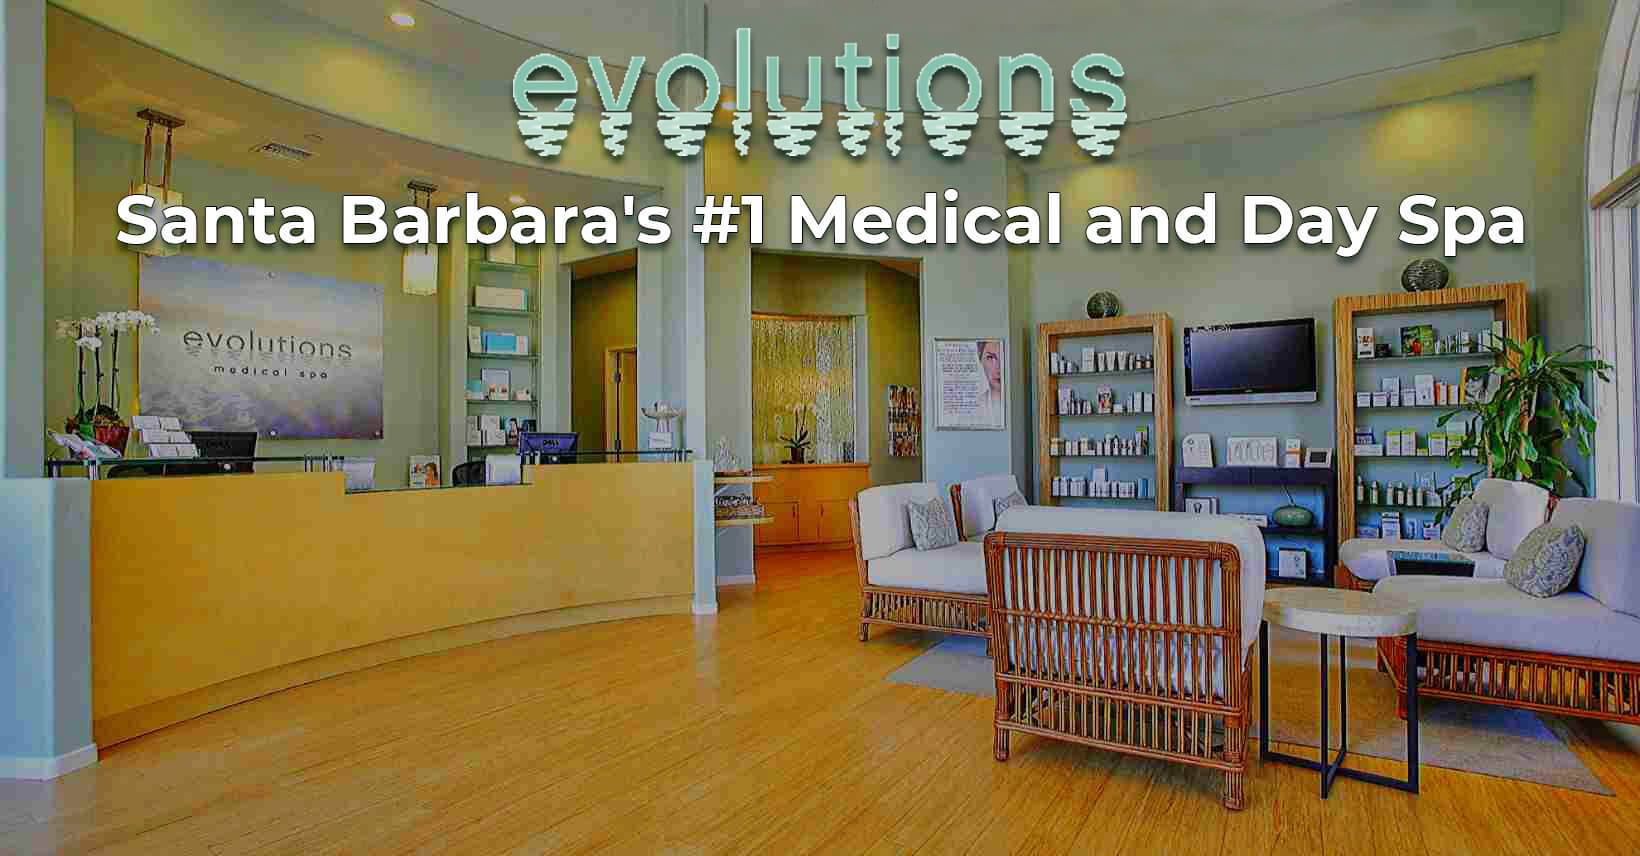 Evolutions Medical And Day Spa In Santa Barbara